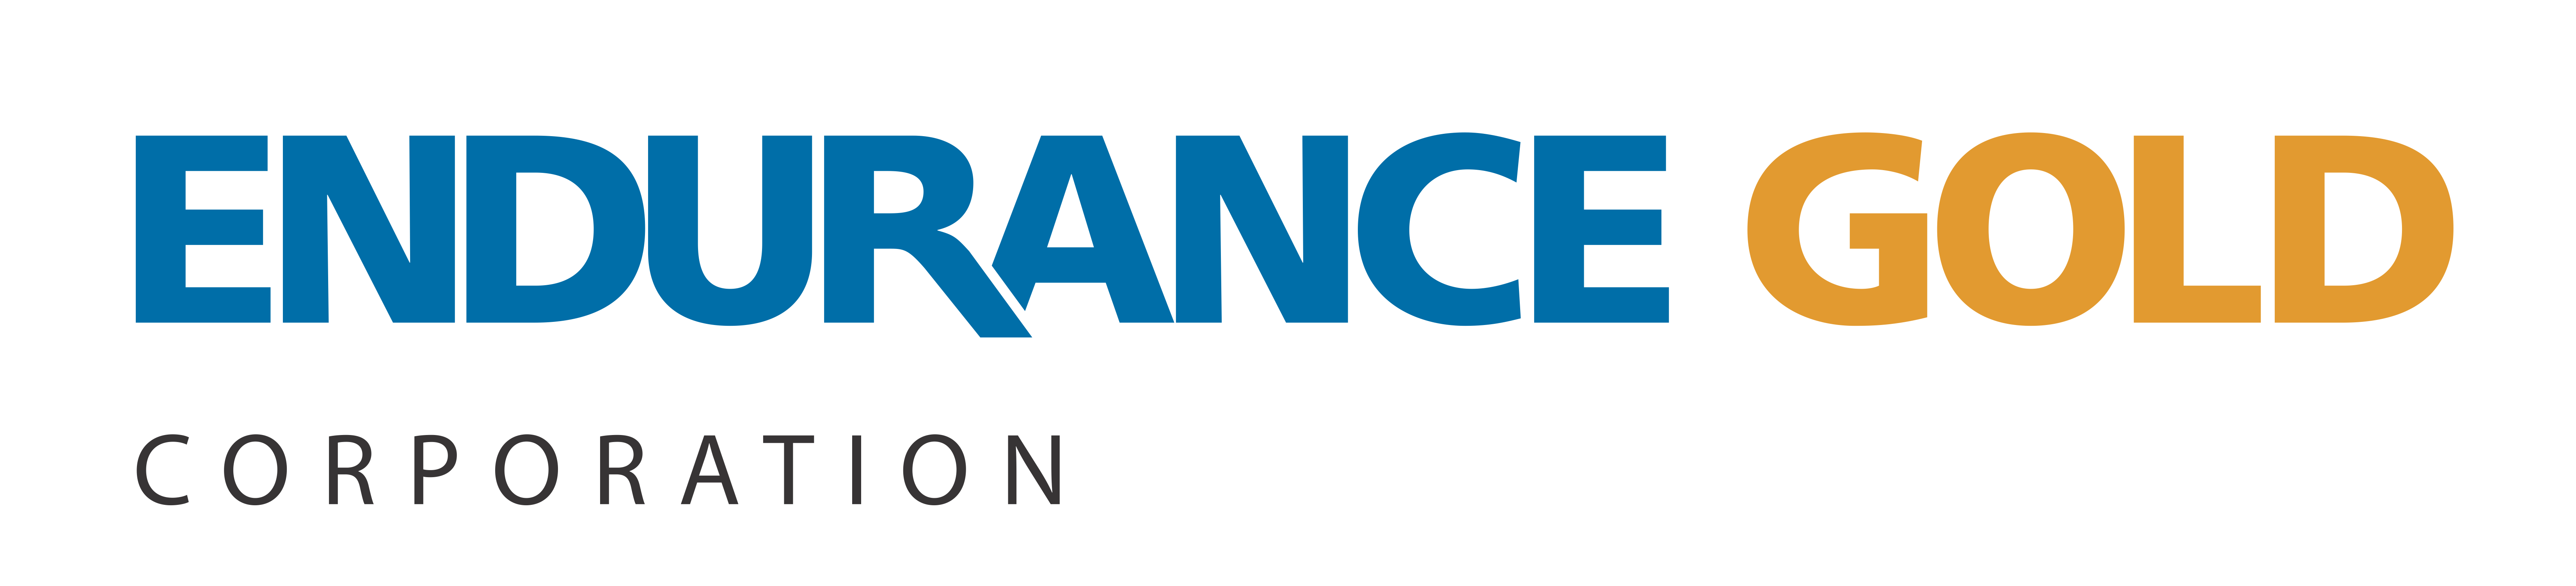 Endurance Gold Corporation Logo